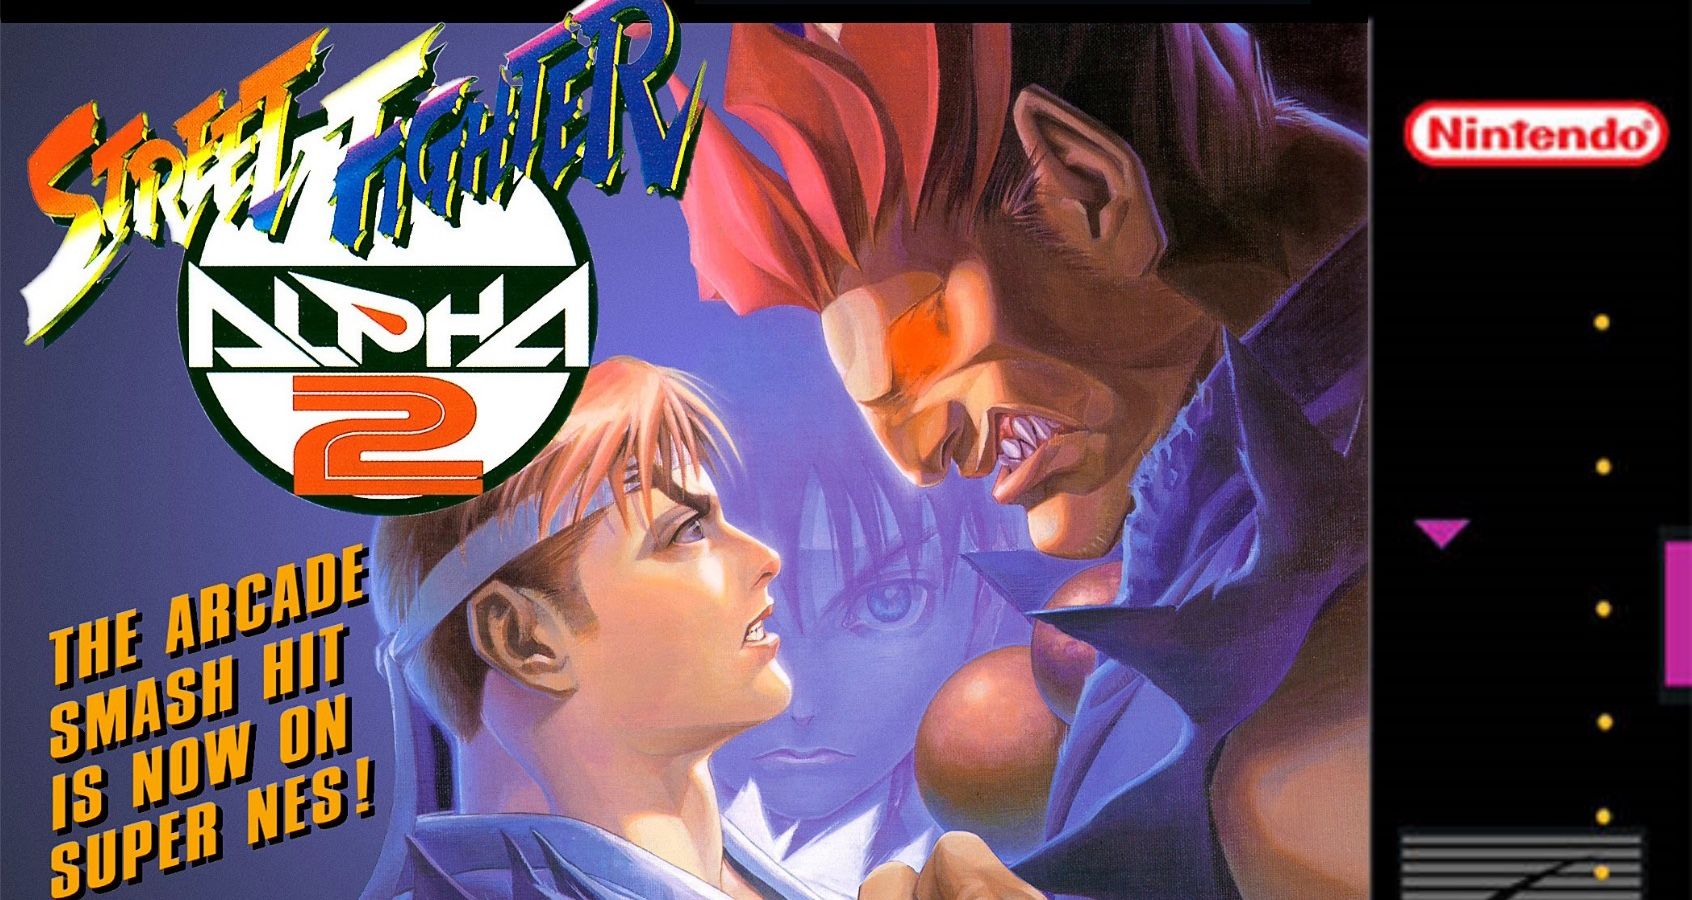 Street Fighter Alpha 2 hidden method discovered after 25 years to unlock  Shin Akuma